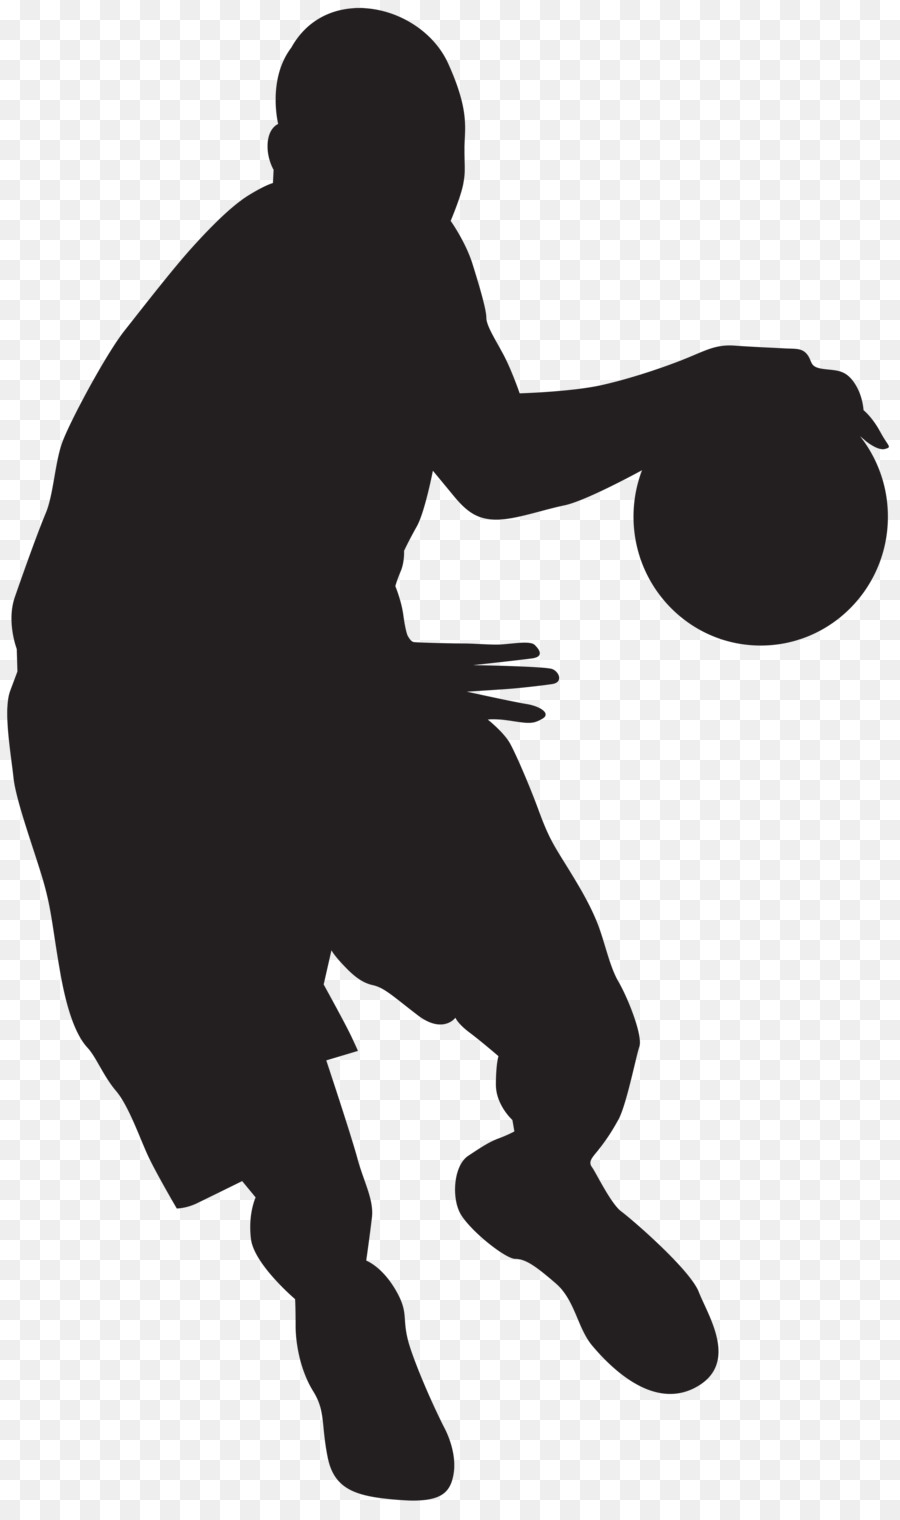 Basketball player Basketball coach Sport Clip art - basketball png download - 4774*8000 - Free Transparent Basketball png Download.